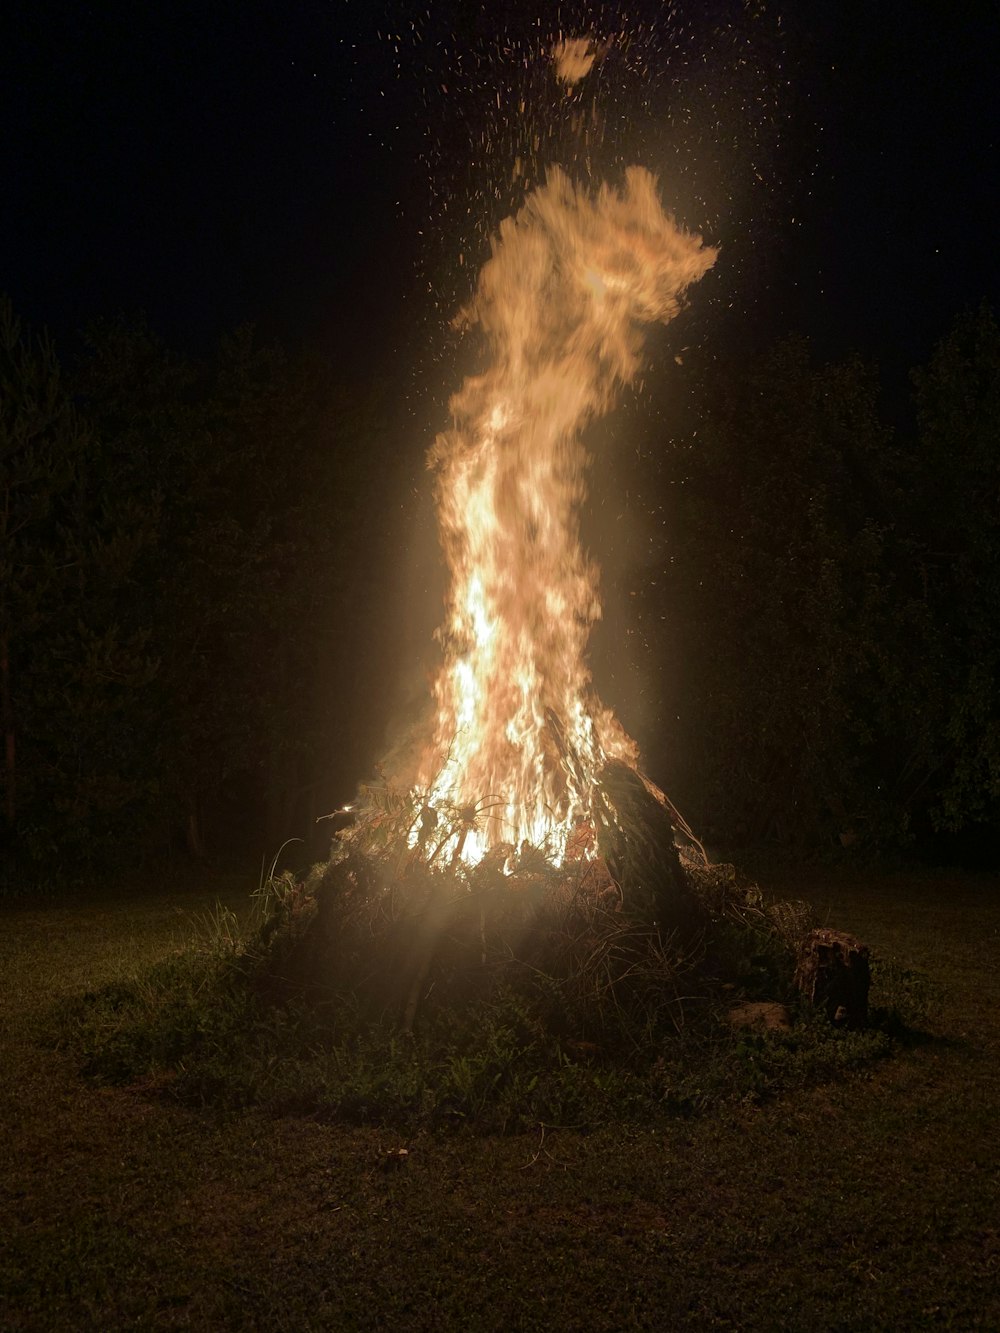 a bonfire is lit in a field at night